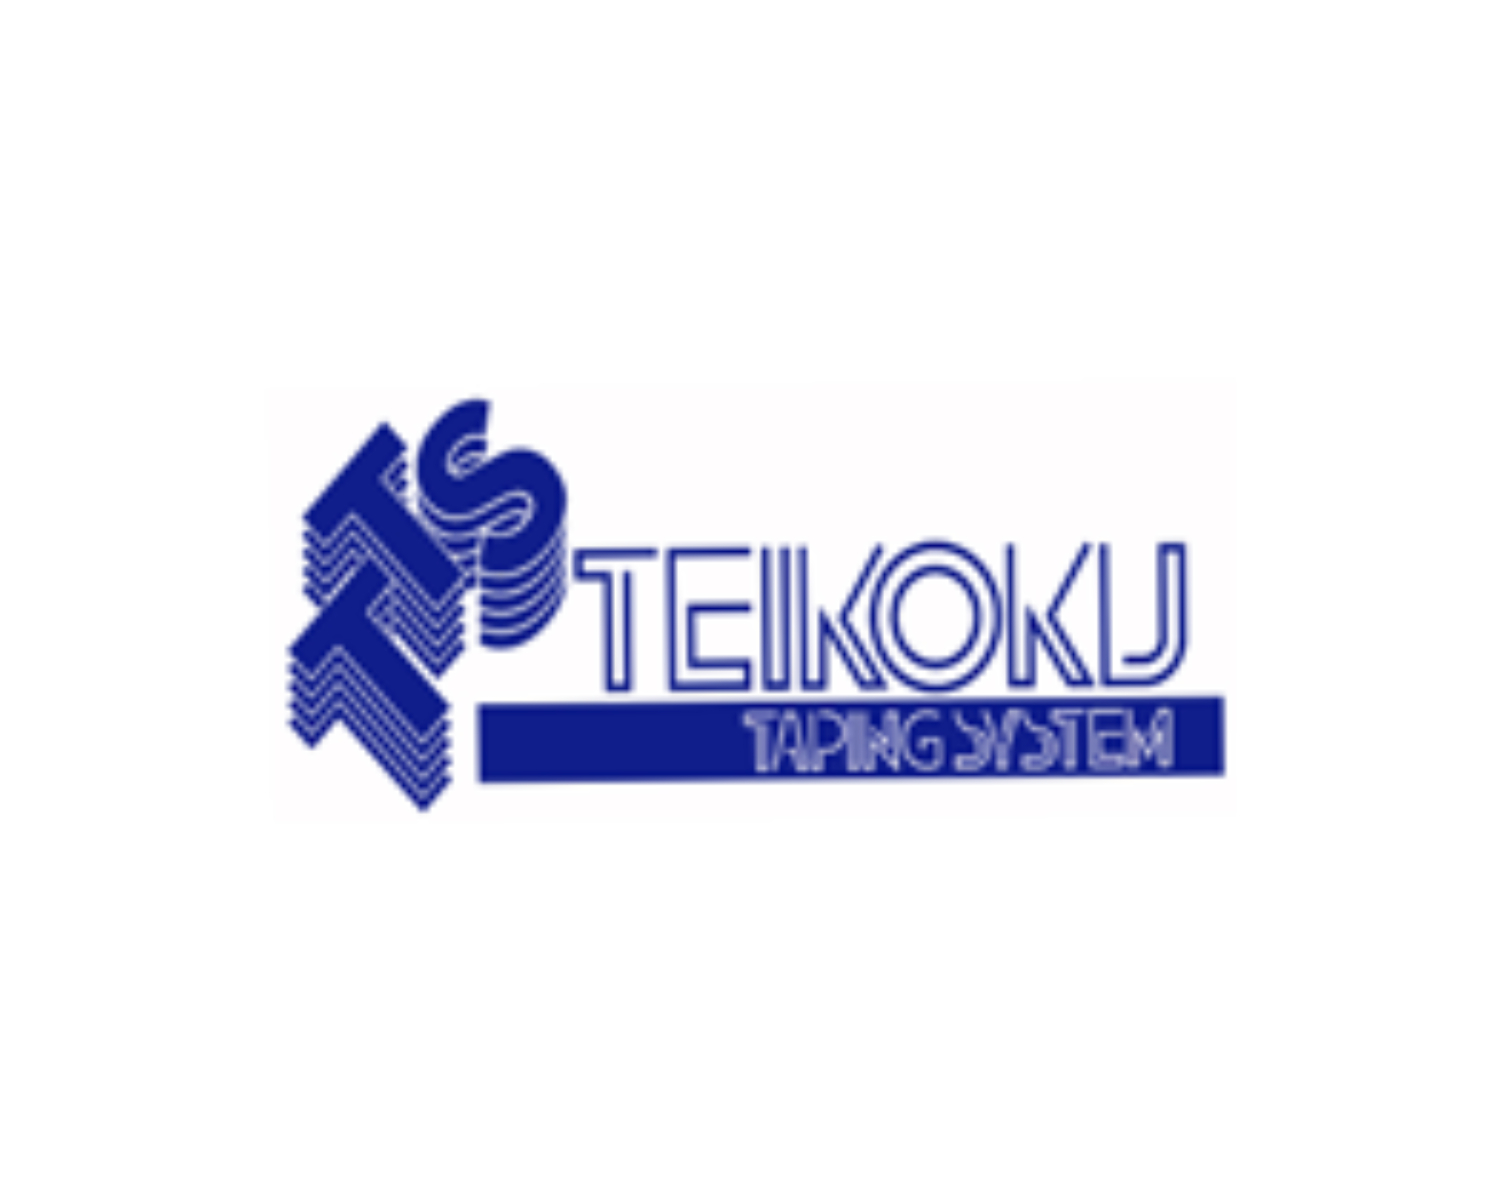 Teikoku Taping System Inc